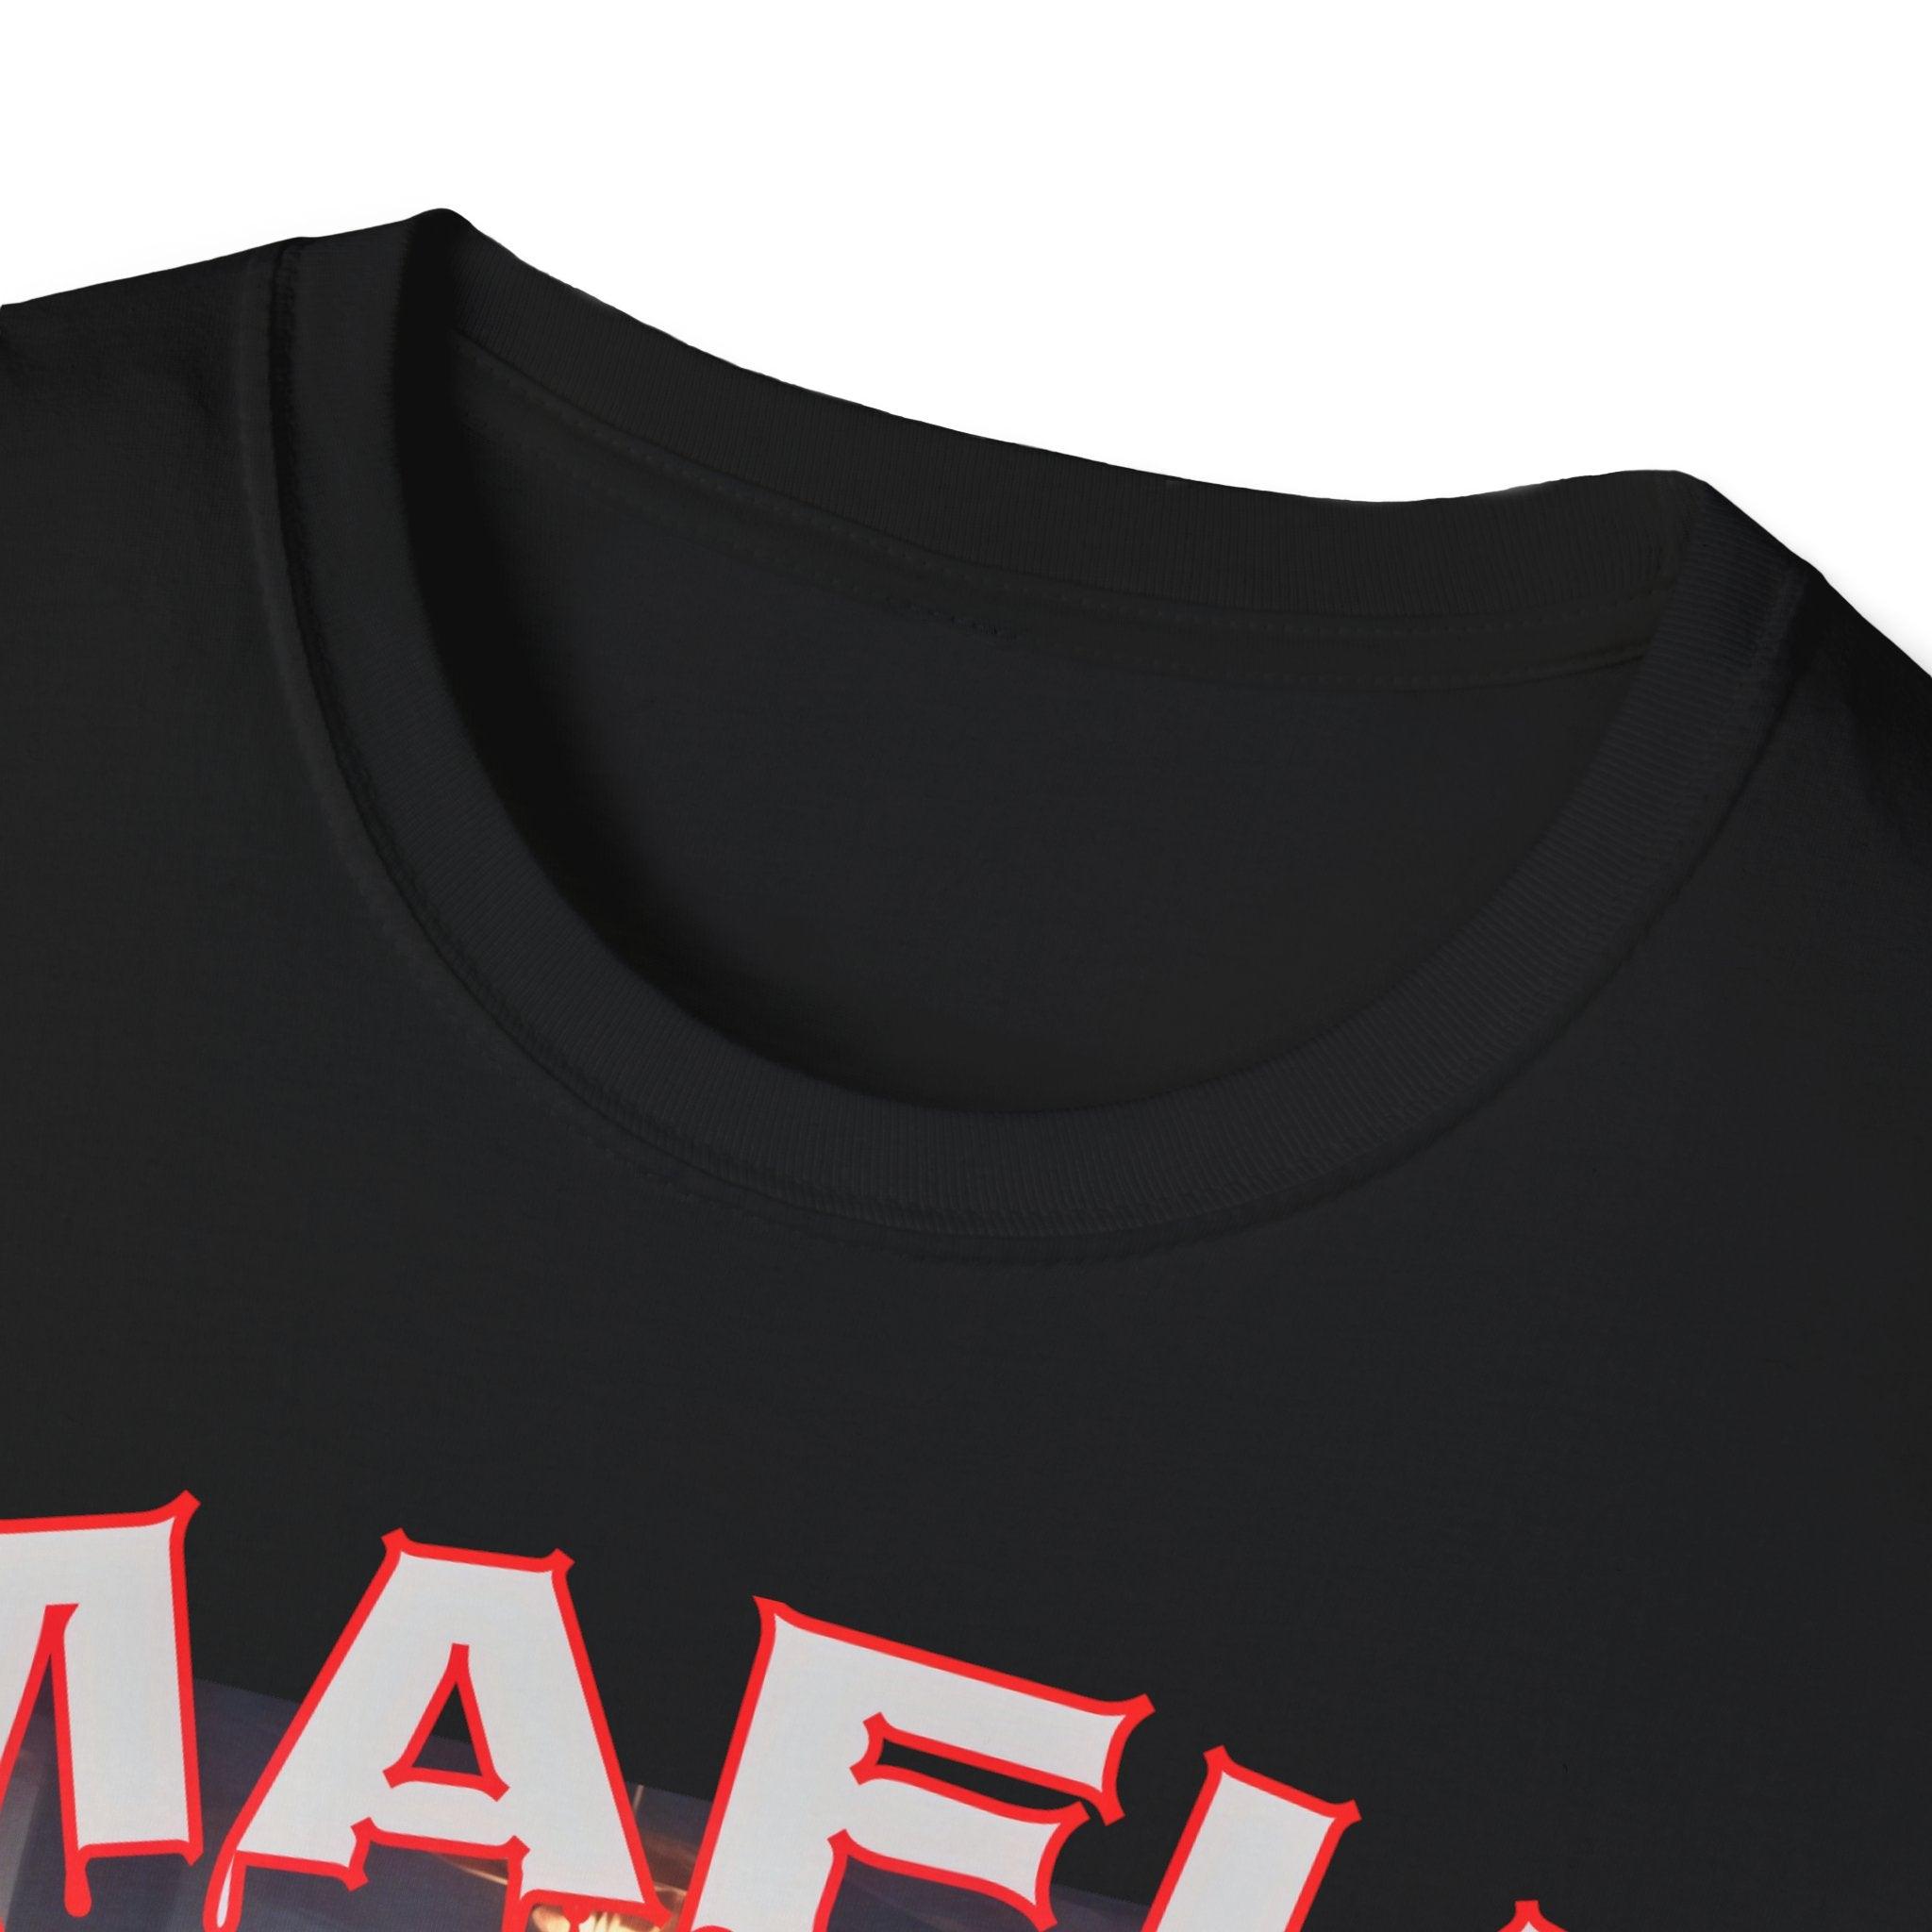 Mafia Shirt - Epic Shirts 403